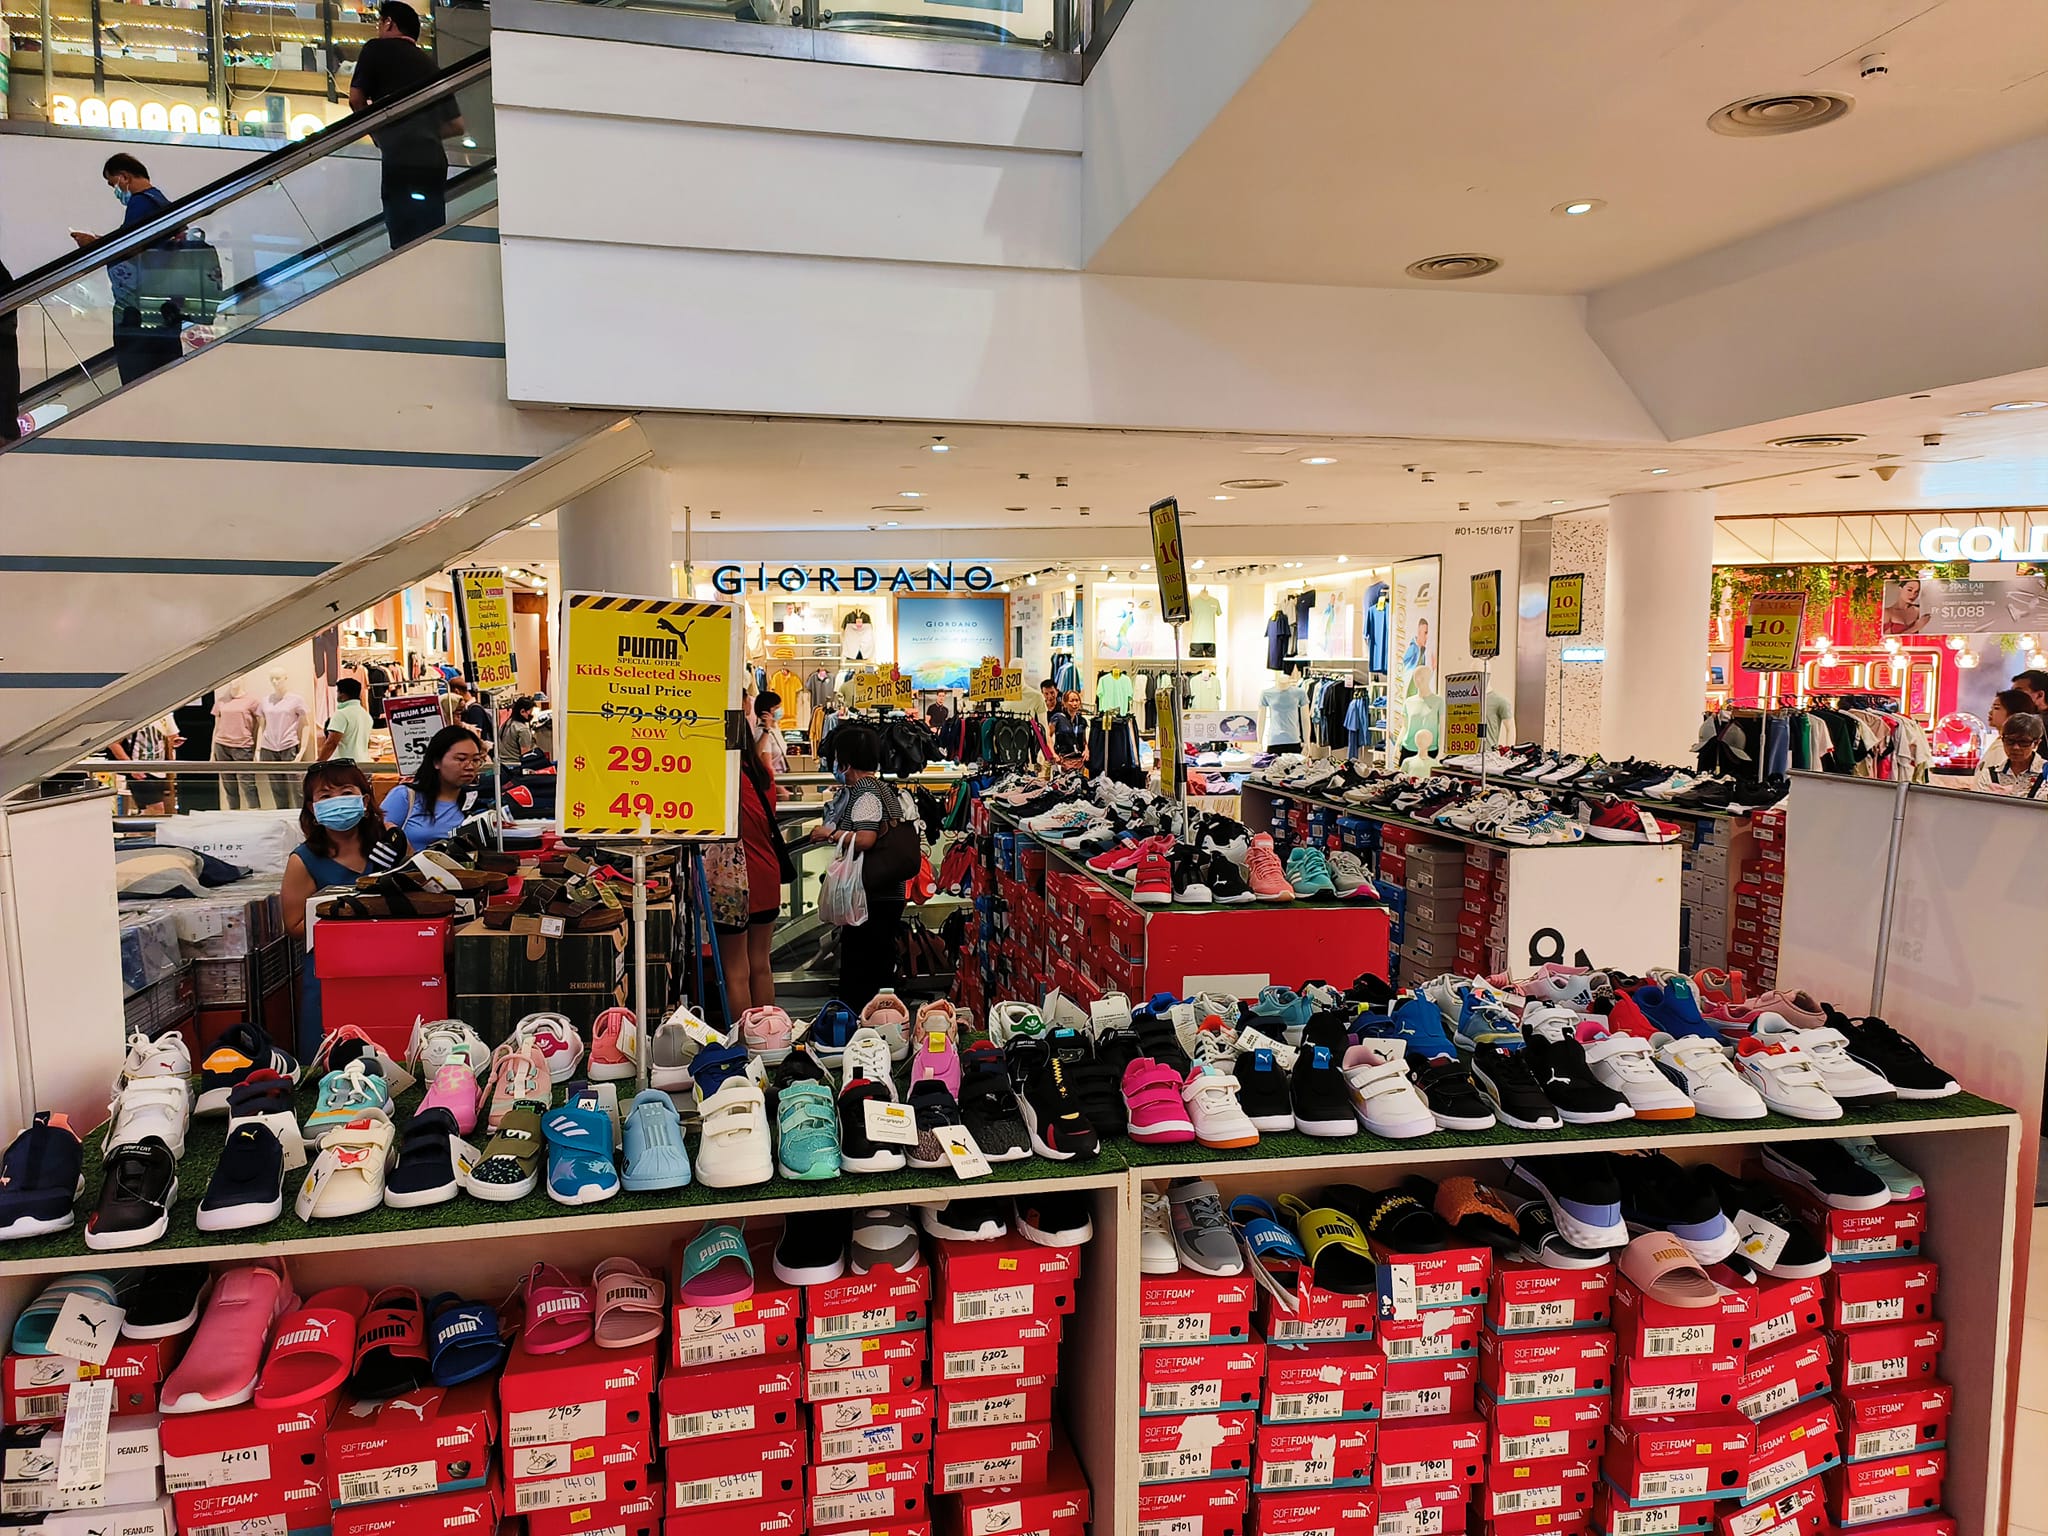 Lobang: Lot One's Atrium Sale Has Buy 1 Get 1 Free Sports Apparels From Adidas, Puma, Reebok & More Till 26 Mar 23 - 9